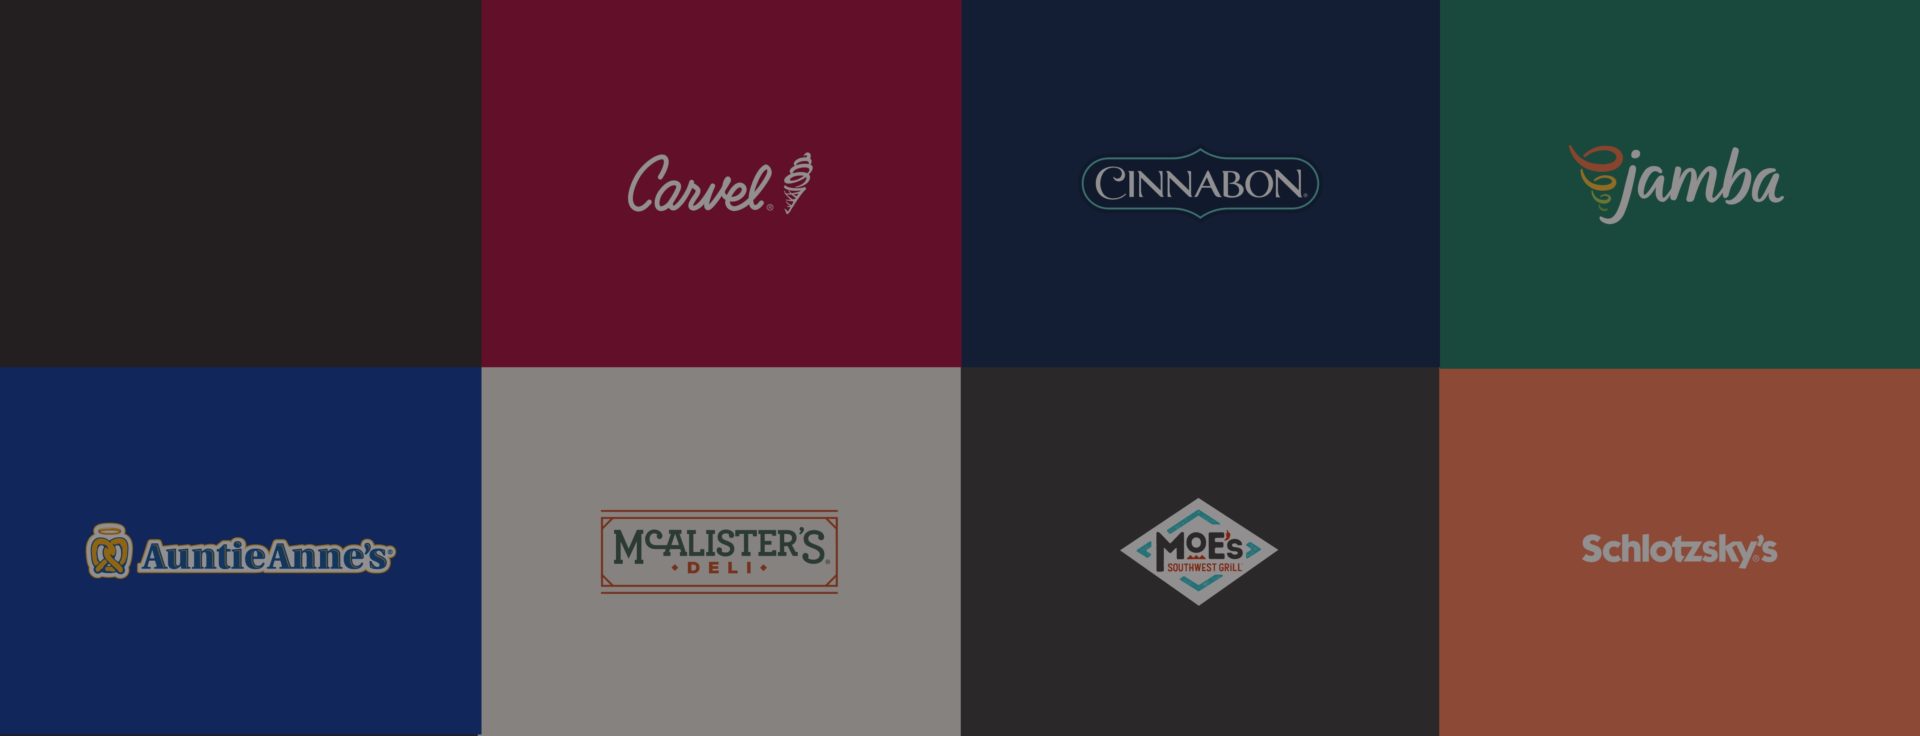 Focus Brands Logos